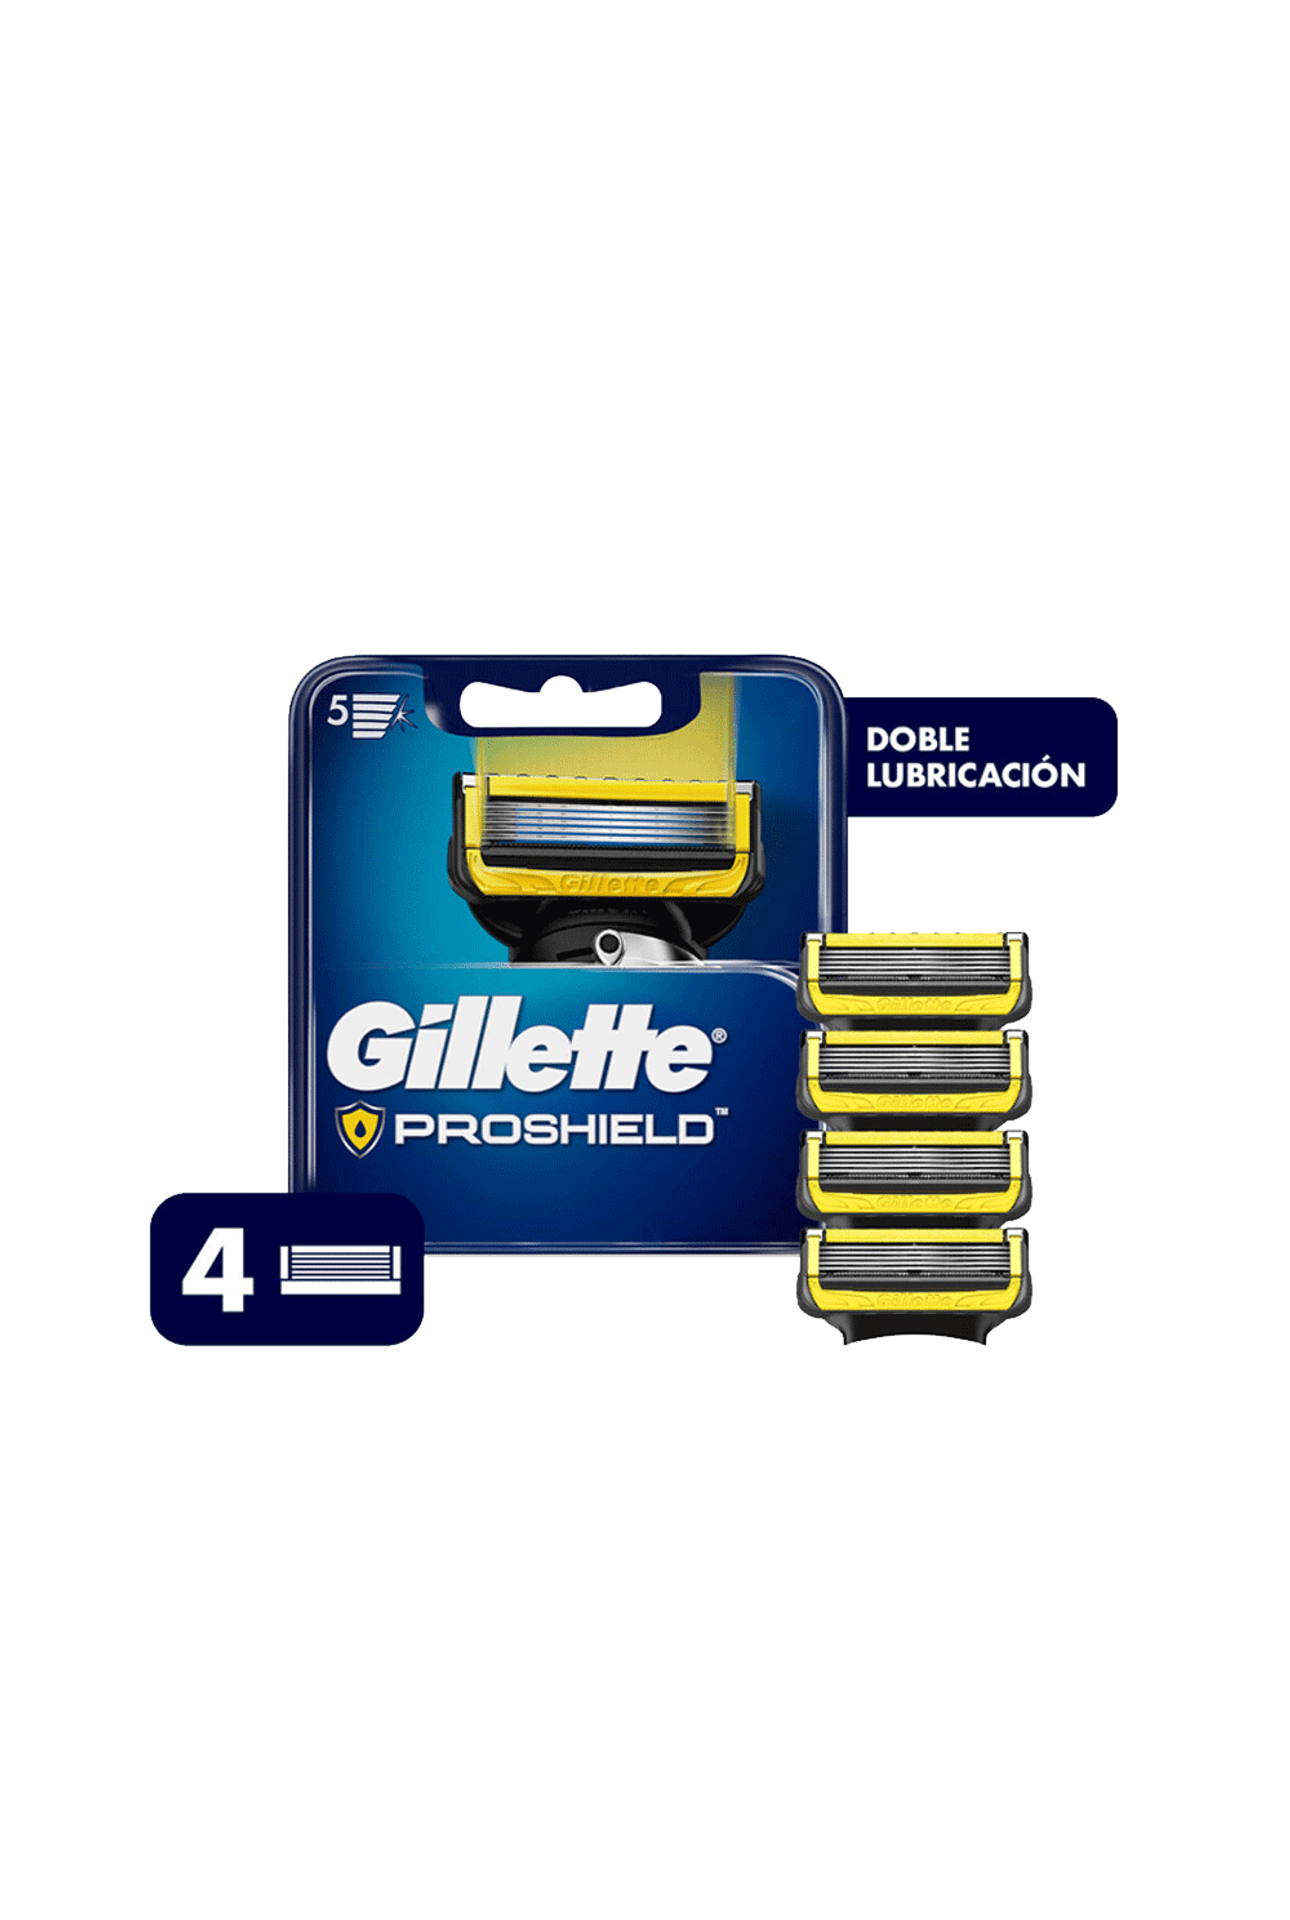 Gillette-Cartuchos-Para-Afeitar-Fusion-Proshield-x-4-un-7500435191630_img1